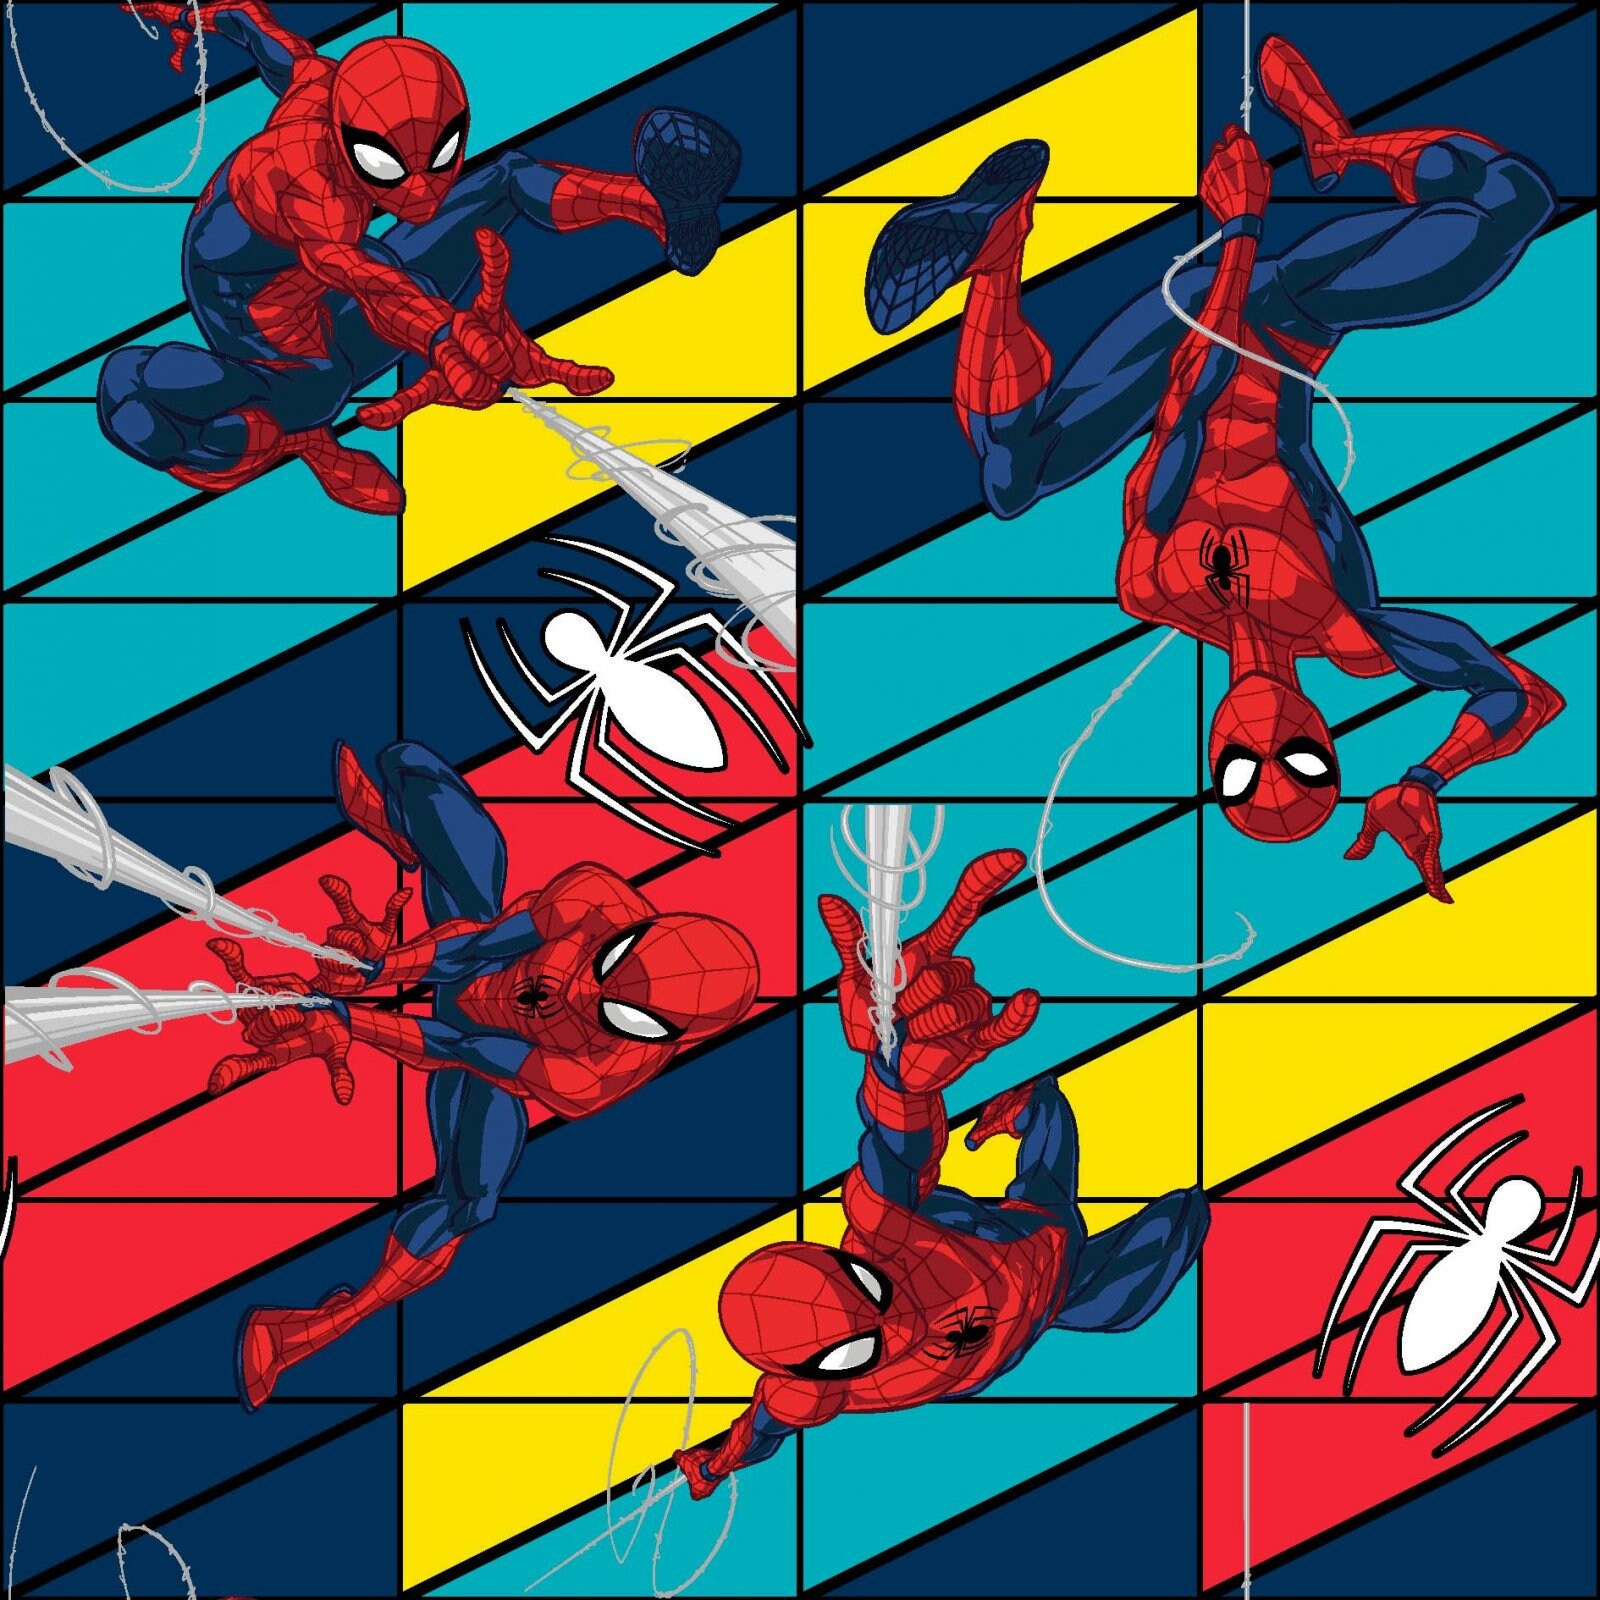 spiderman fabric, super hero fabric, Spiderman swirls fabric, spiderman,  quilting apparel cotton cotton fabric, Marvel Comic fabric